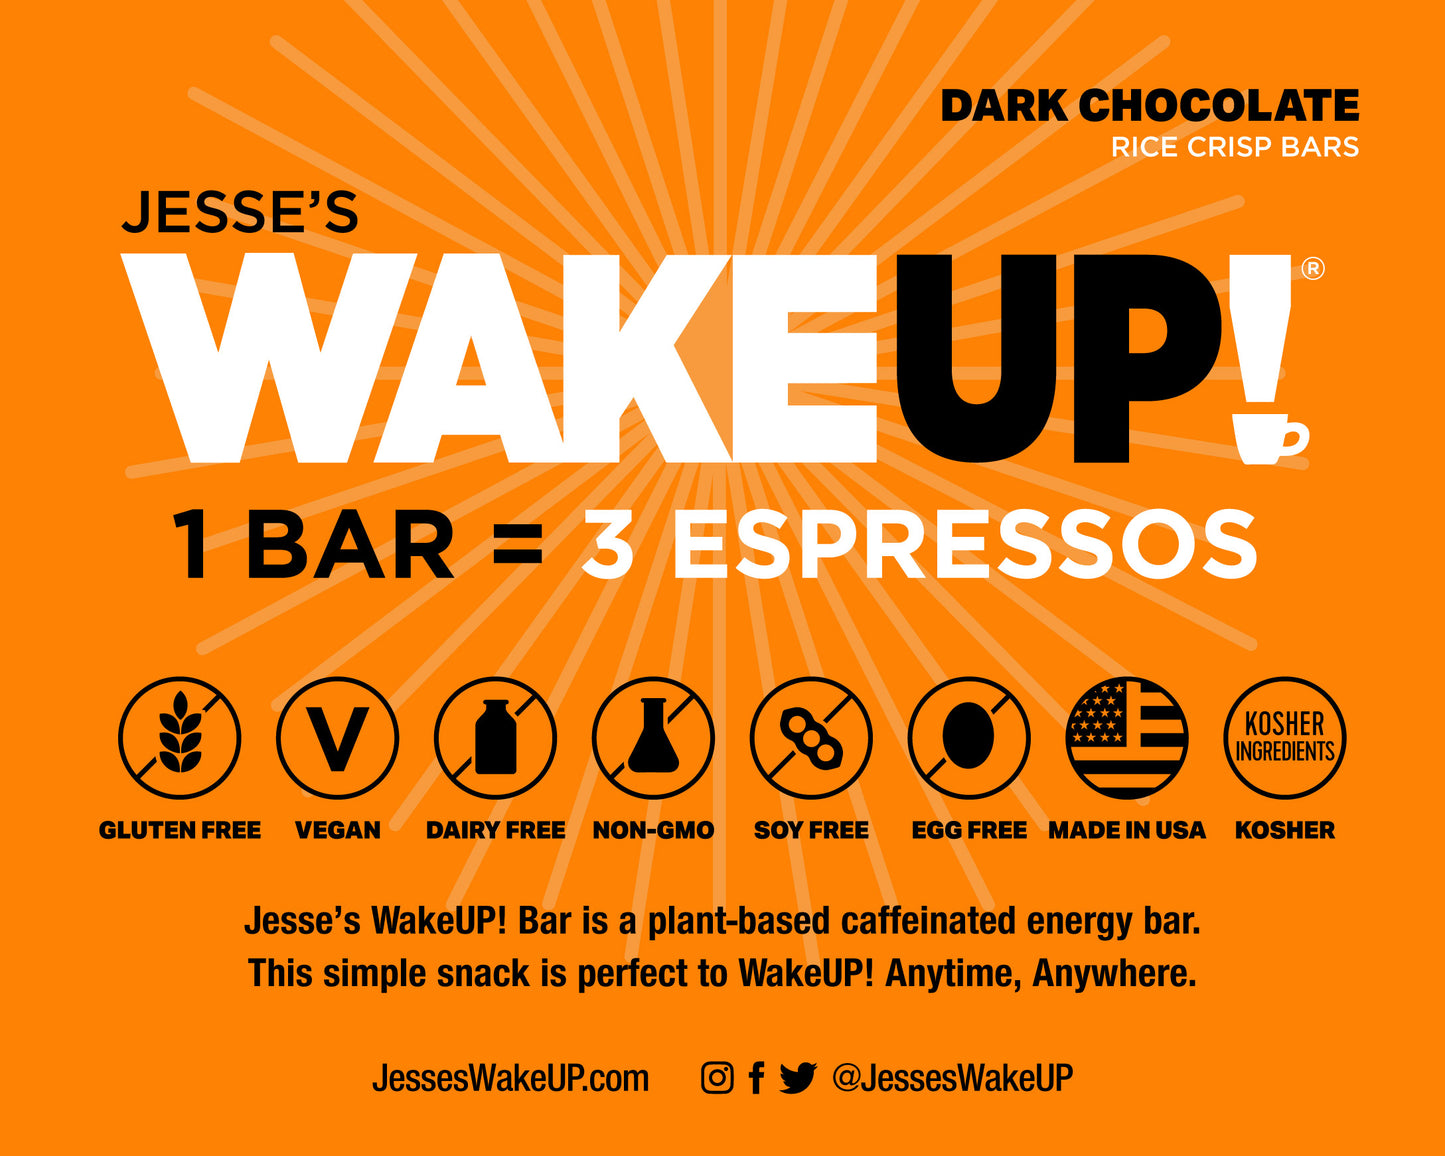 Jesse's WakeUP! 1 Bar = 3 Espressos (Chocolate)